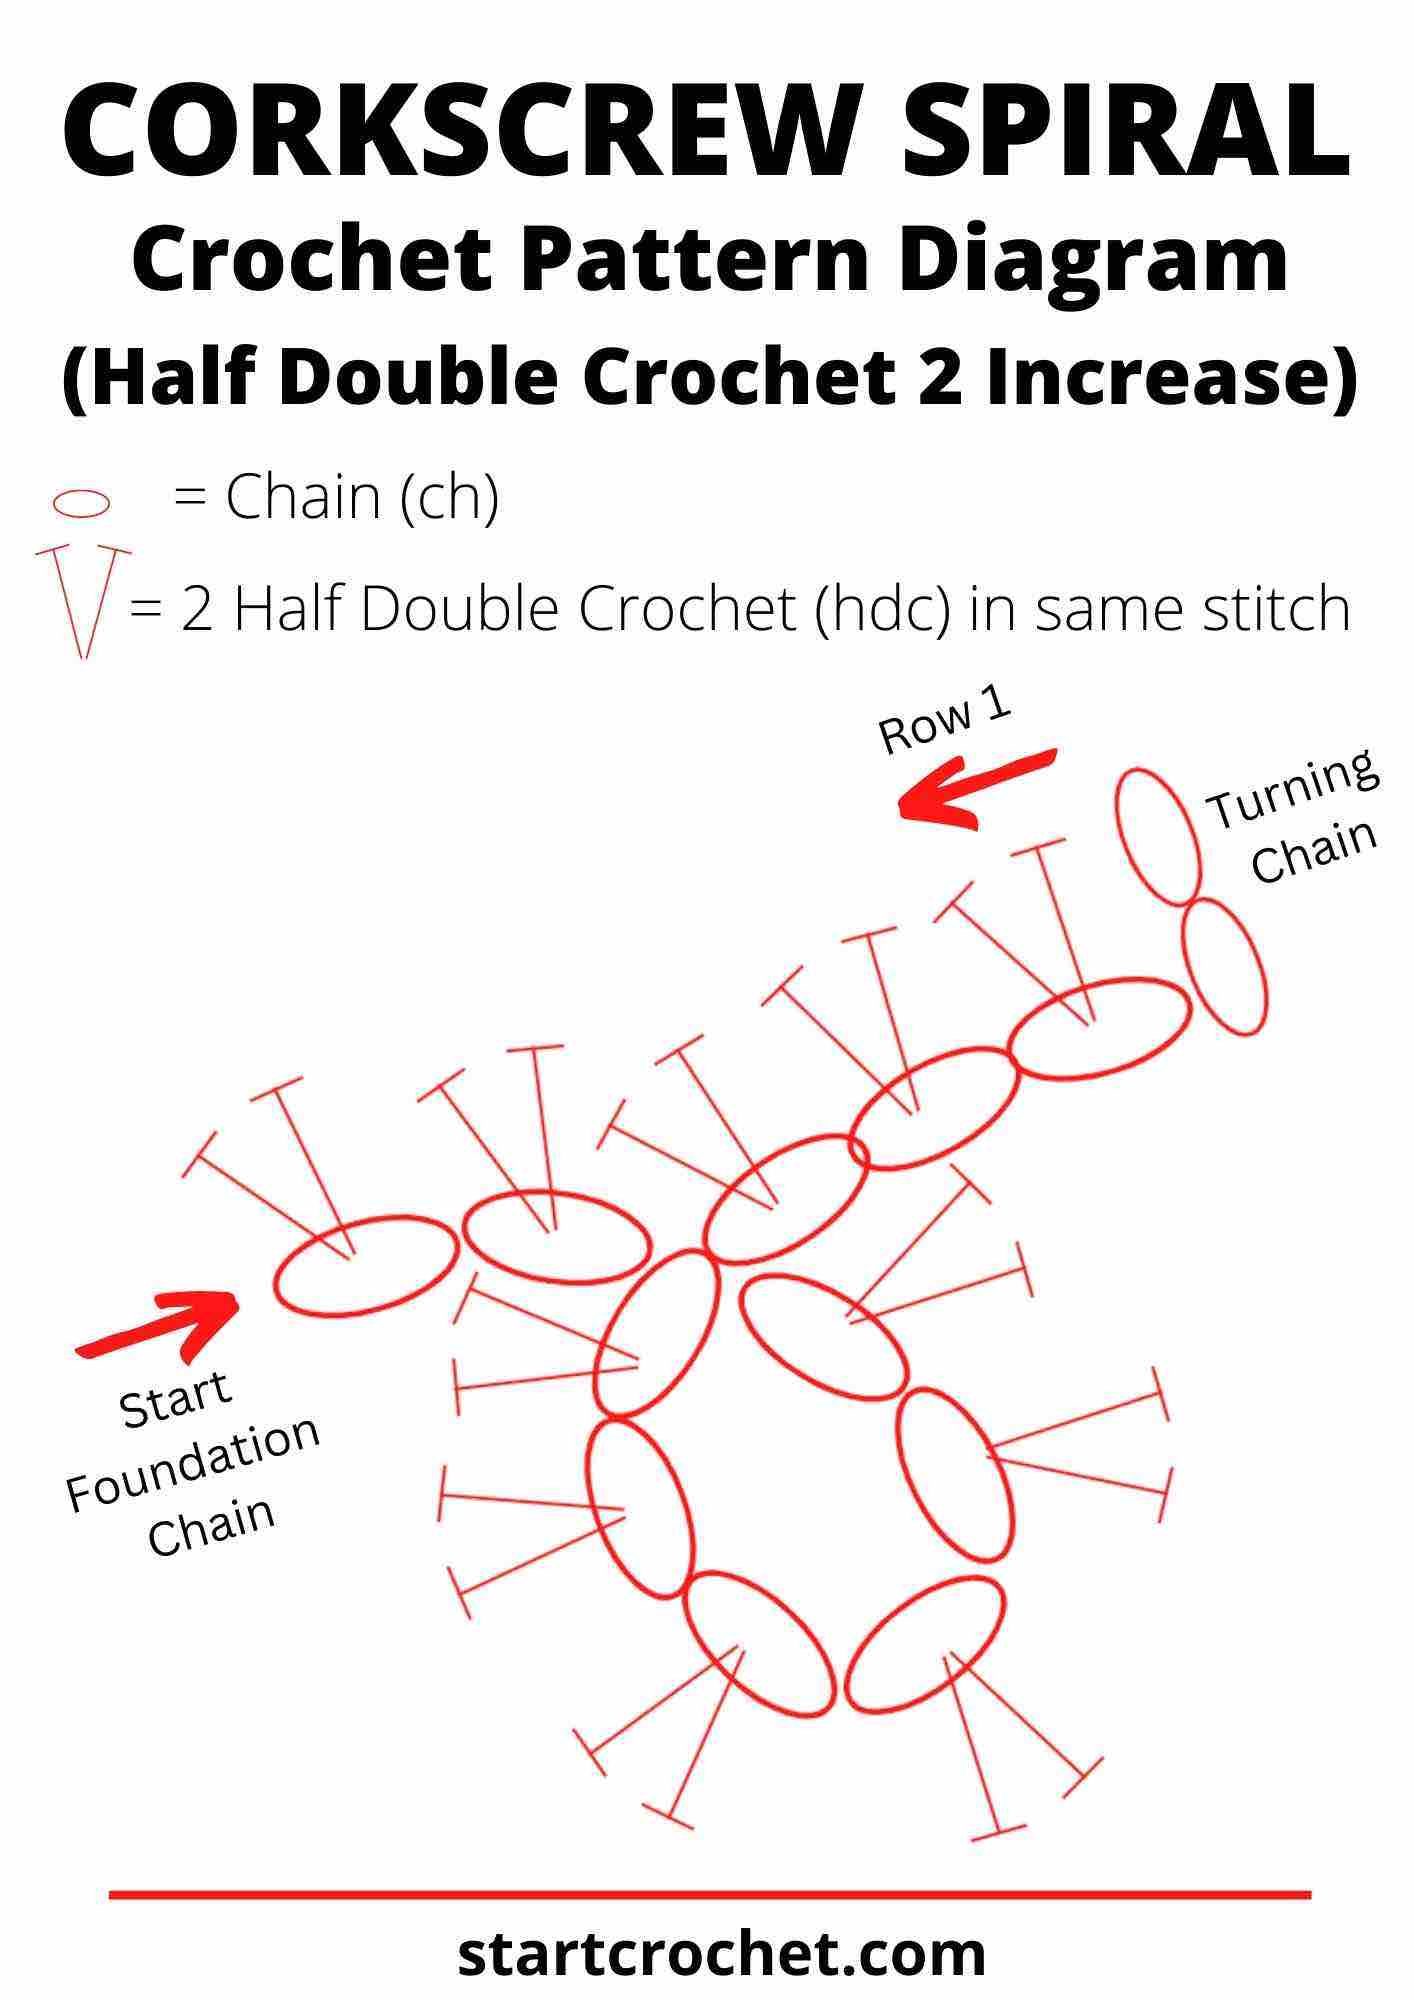 Corkscrew-Spiral-pattern-Diagram-hdc-2-increase